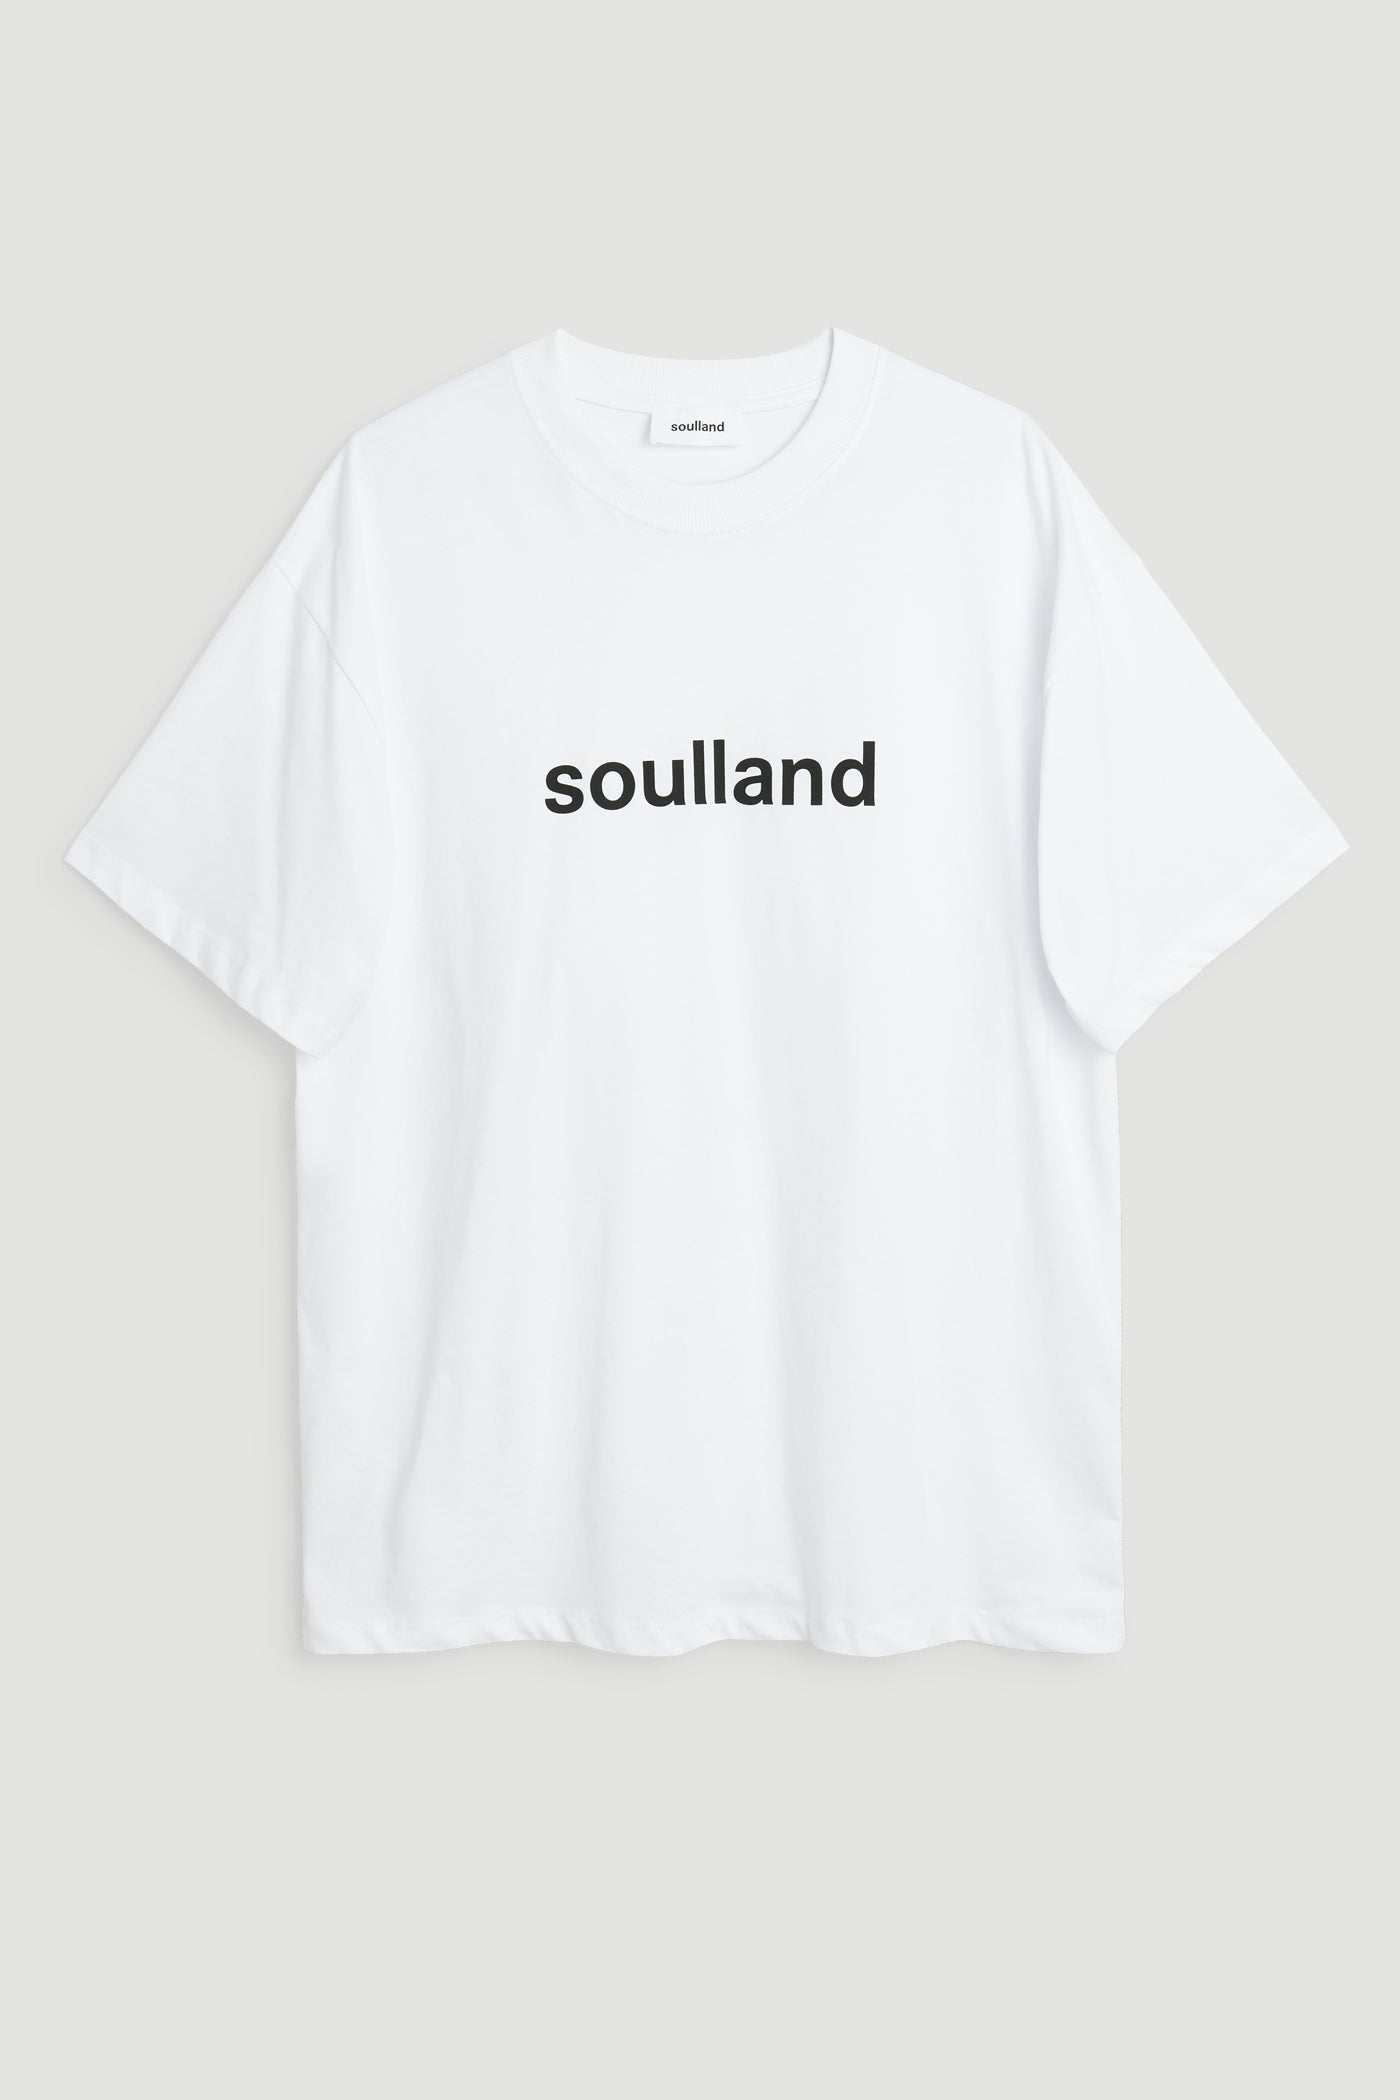 SOULLAND-OUTLET-SALE-Ocean-T-shirt-Shirts-ARCHIVE-COLLECTION-3_ea10152d-ae3b-4ed3-b31c-656bce1d96b5.jpg